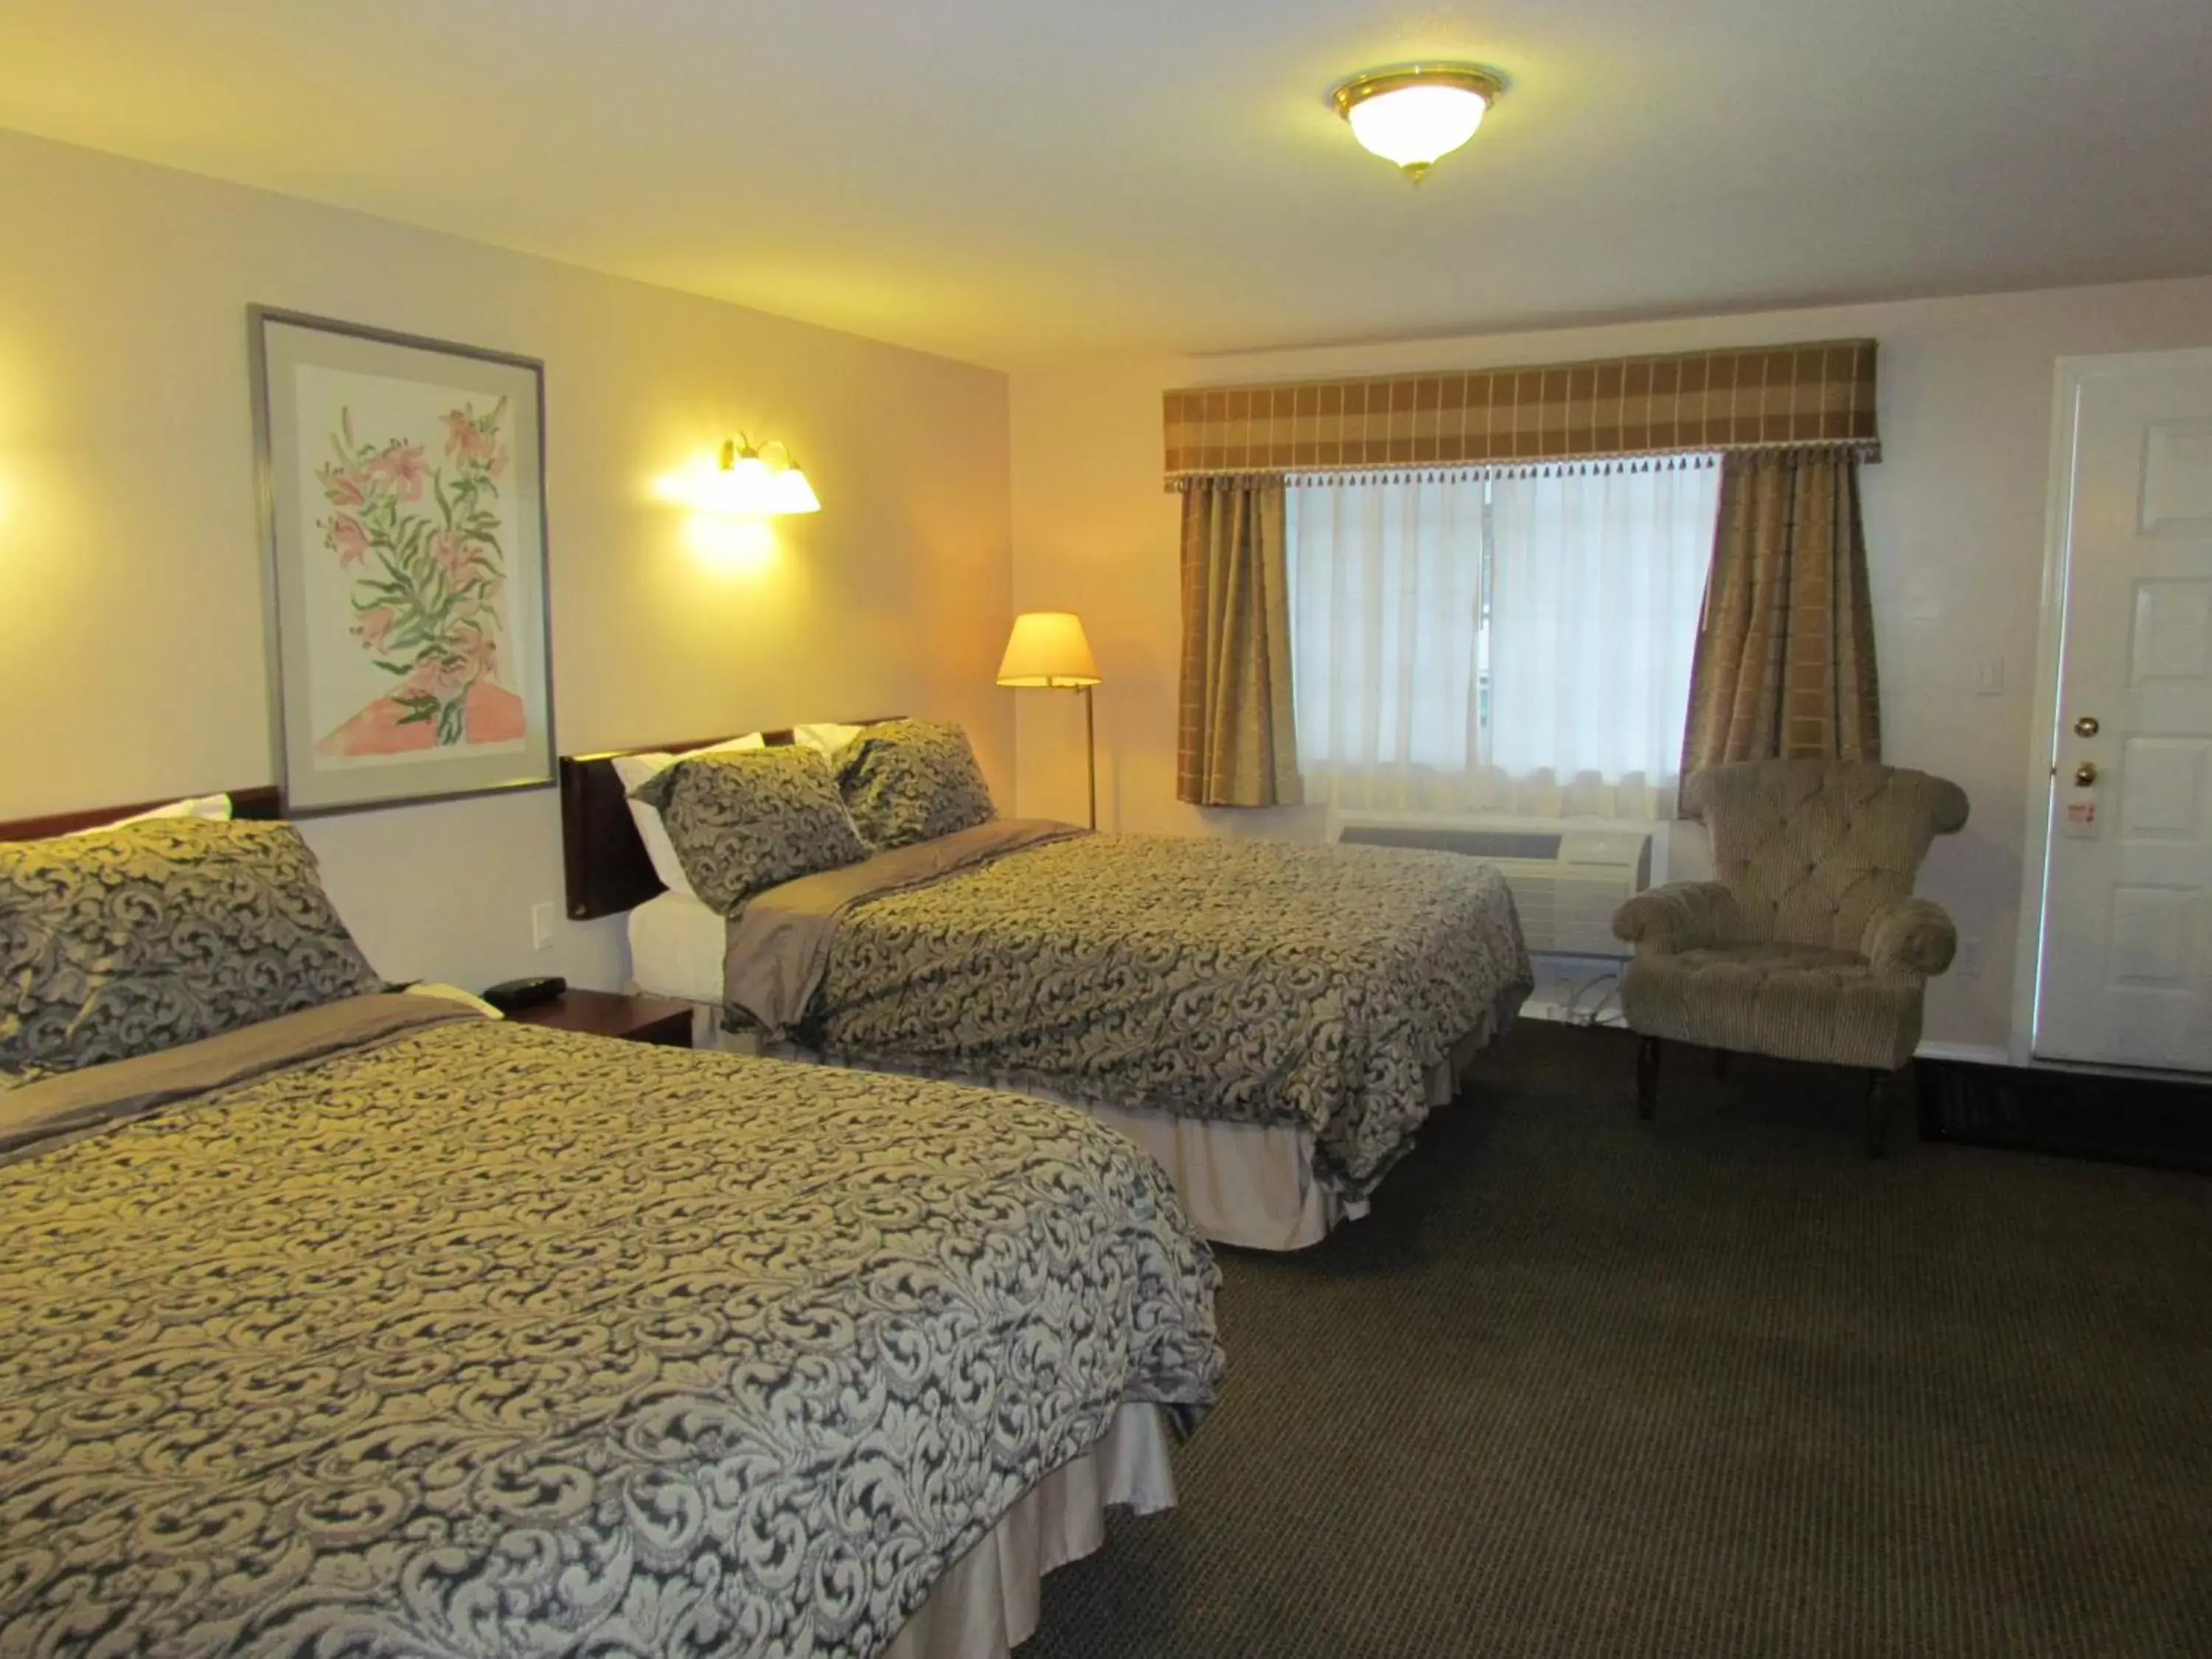 Deluxe Queen Room with Two Queen Beds in Rosedale Motel